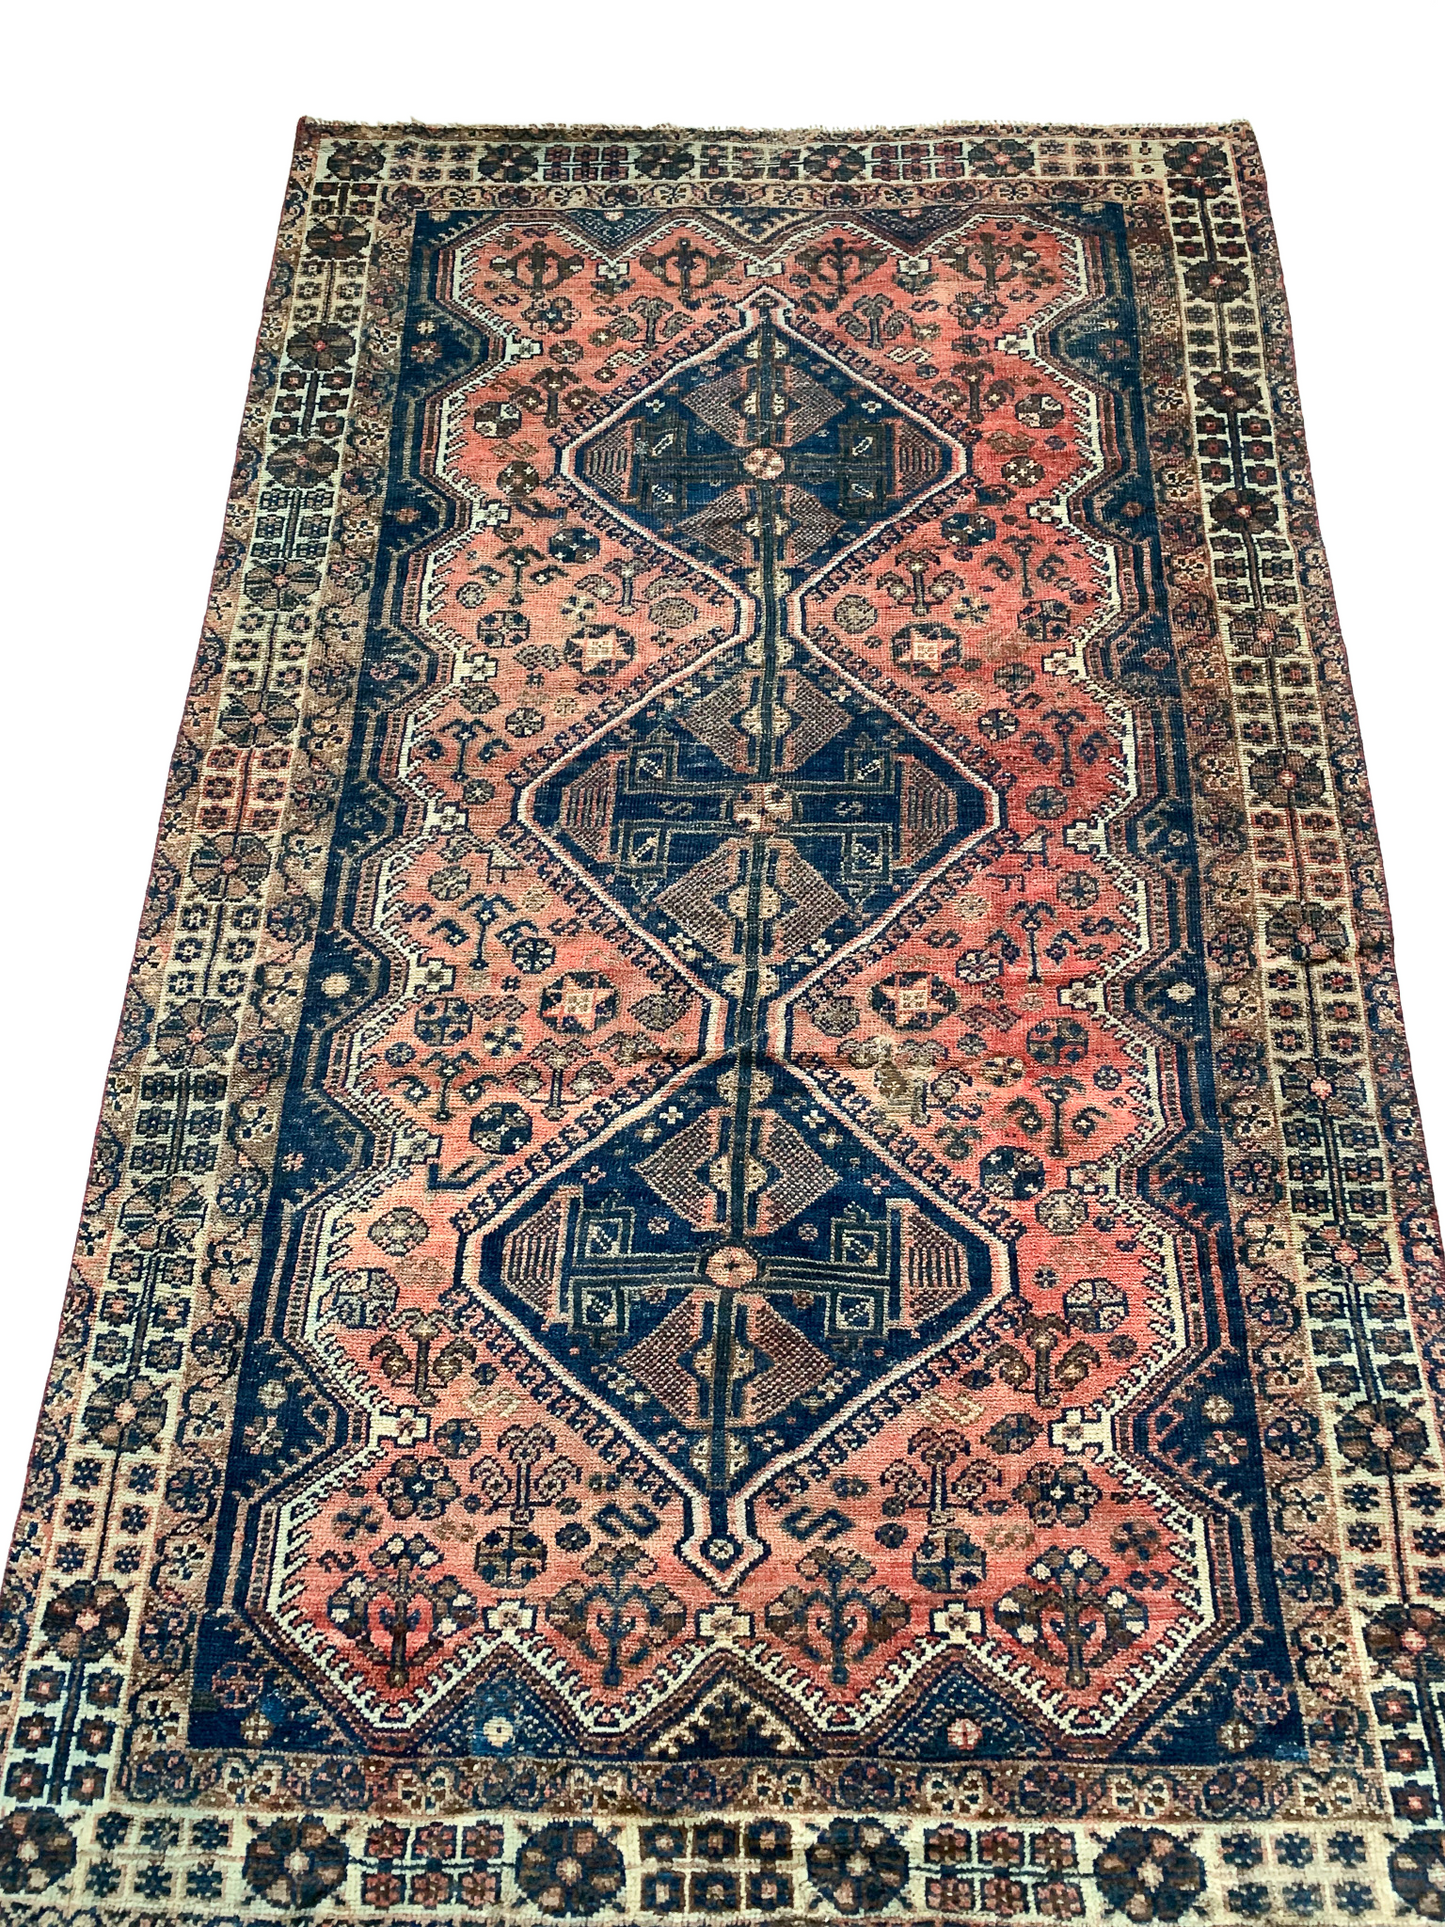 A1112- 4.8' x 7.8' Vintage Persian Area Rug